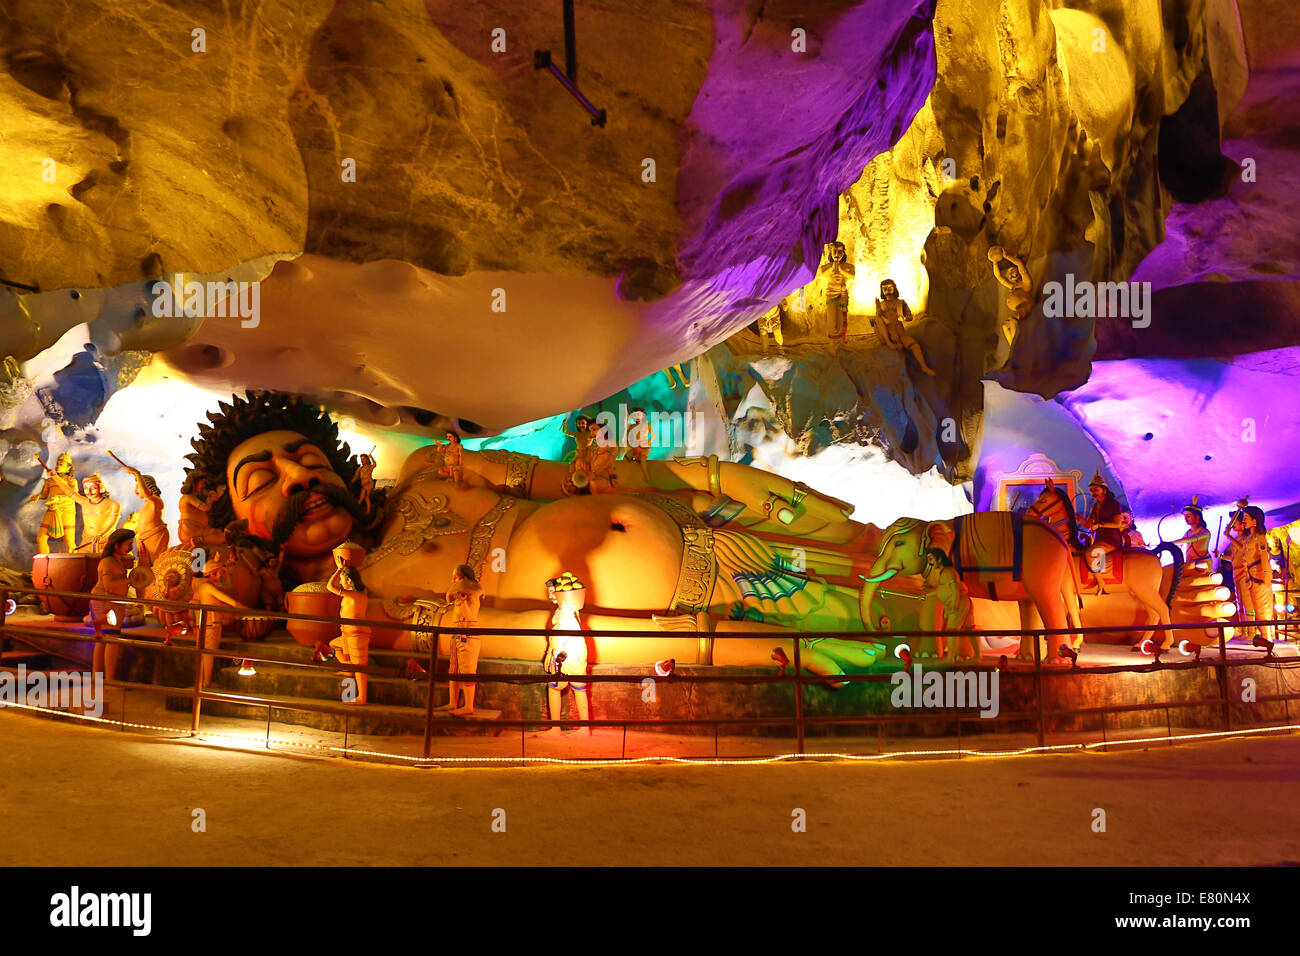 The Ramayana Cave at the Batu Caves, a Hindu shrine in Kuala Lumpur, Malaysia Stock Photo